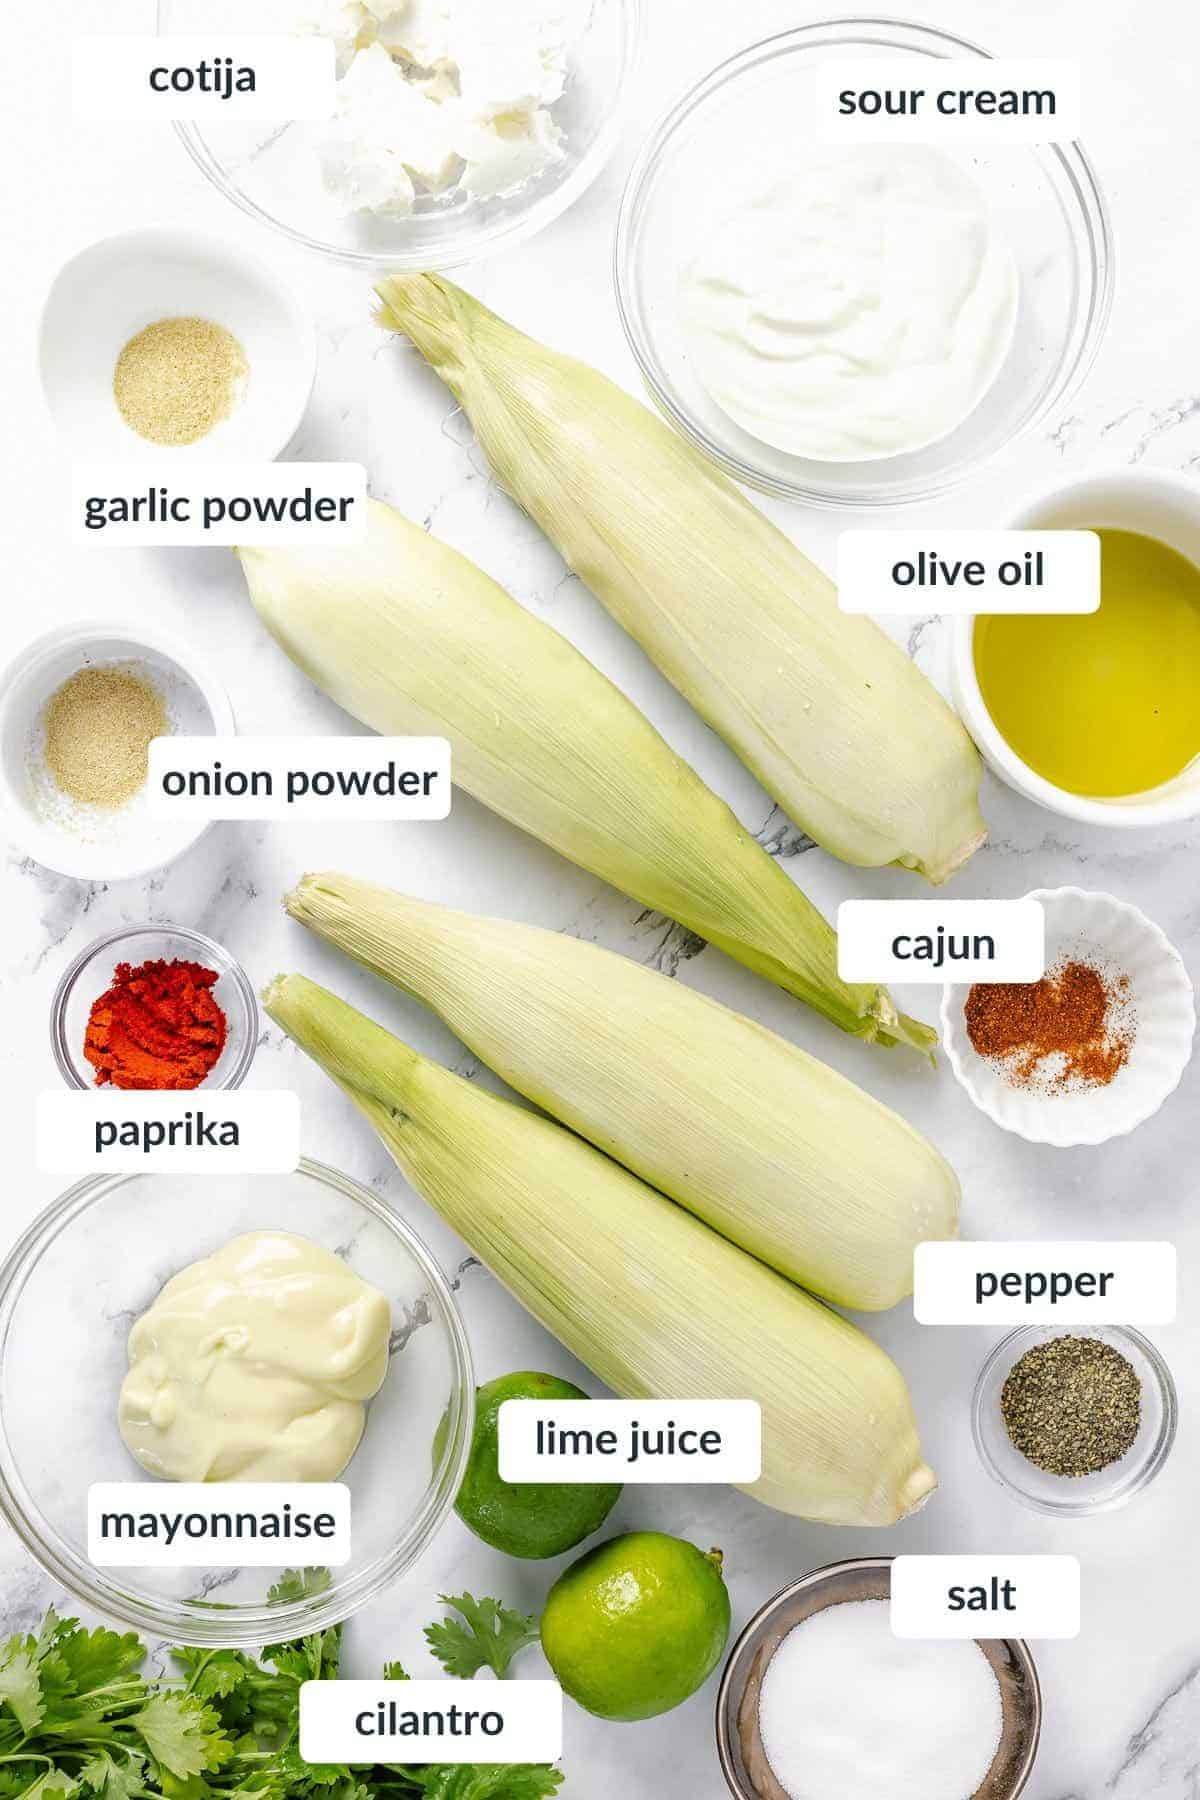 Ingredients flat lay shot for Cajun Corn On The Cob